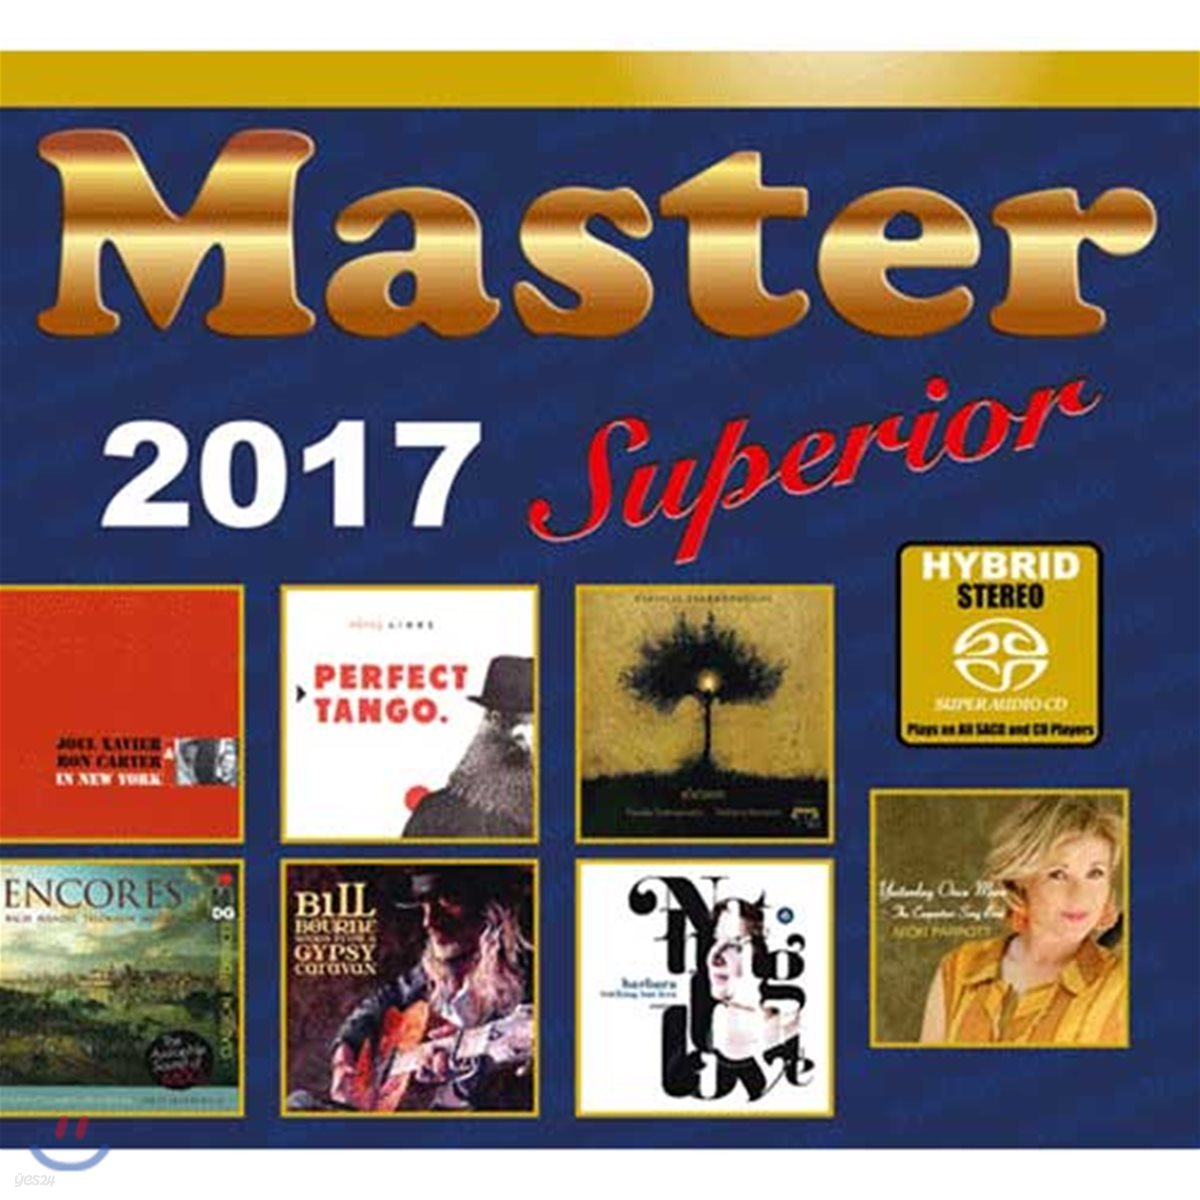 2017 Master Music 레이블 오디오파일 샘플러 (Master Superior 2017)